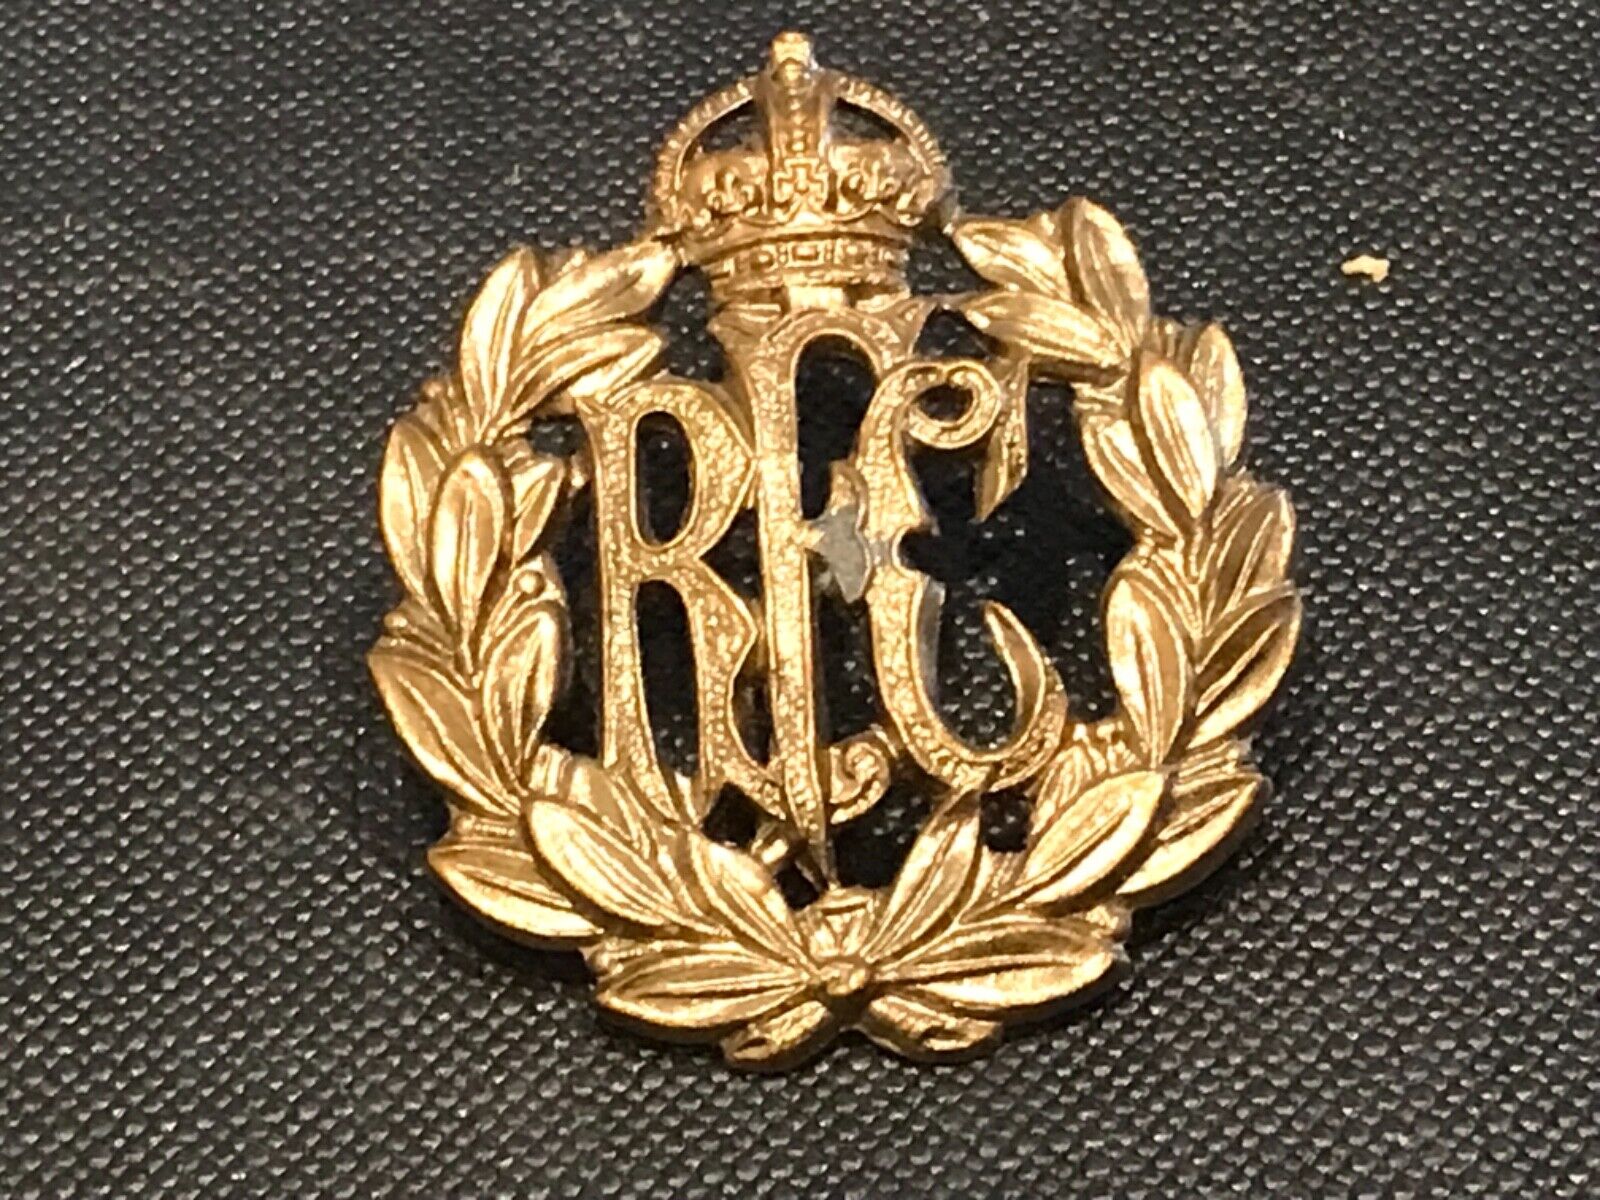 Royal Flying Corp cap badge